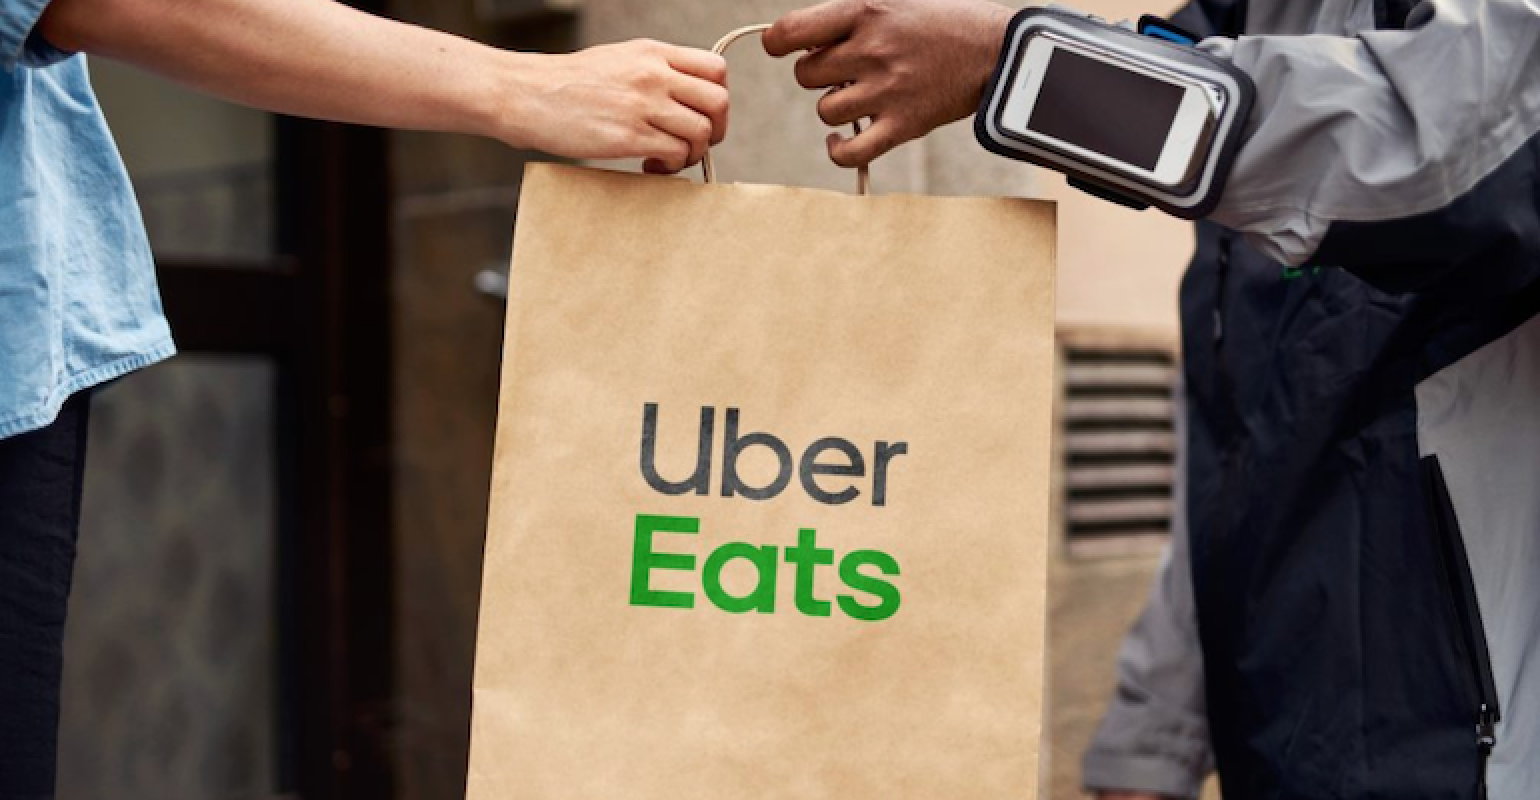 A man giving an Uber Eats paper bag to a woman